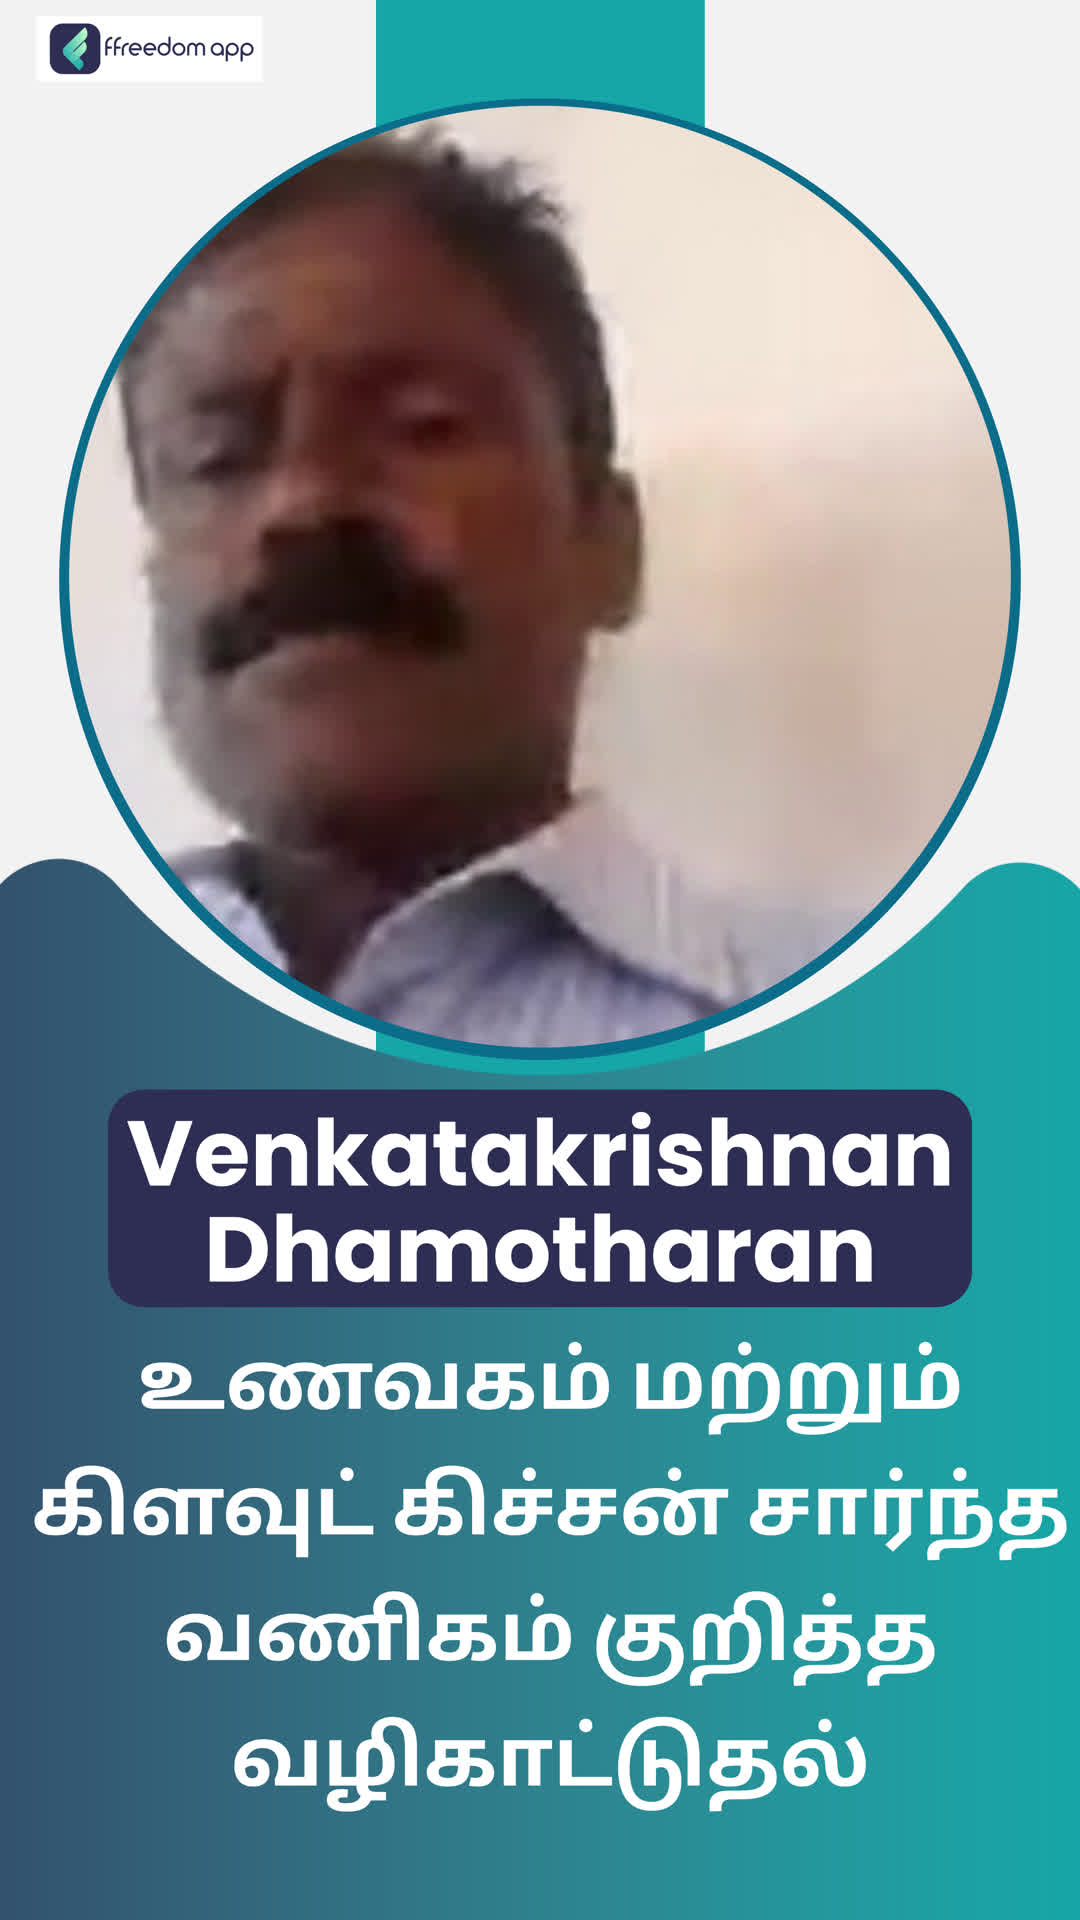 Dhamotharan V's Honest Review of ffreedom app - Thoothukudi ,Tamil Nadu